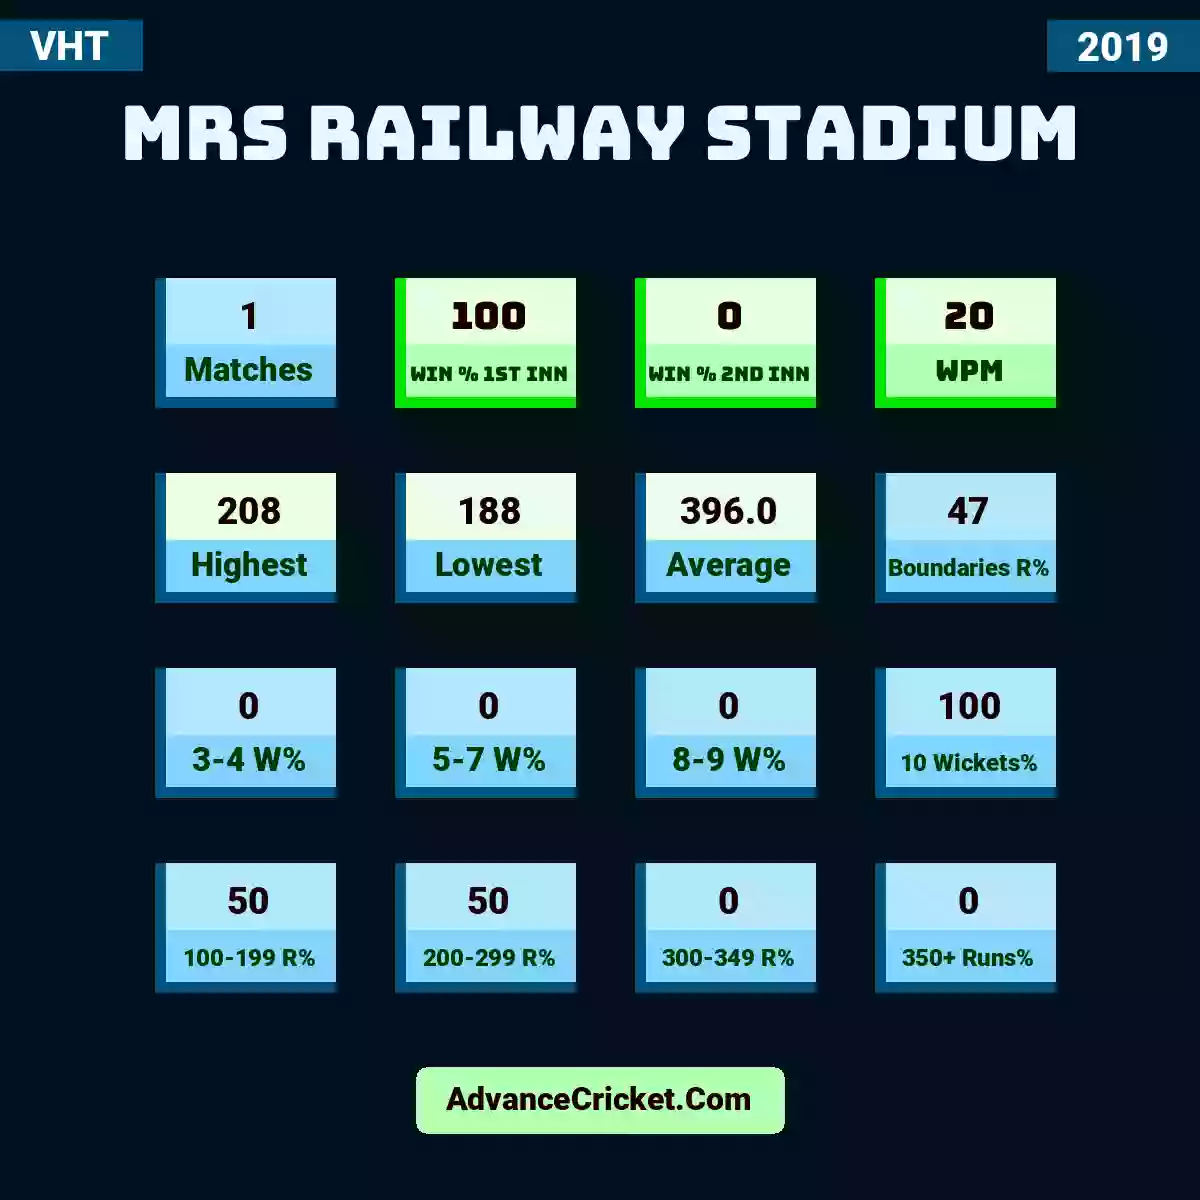 Image showing MRS Railway Stadium with Matches: 1, Win % 1st Inn: 100, Win % 2nd Inn: 0, WPM: 20, Highest: 208, Lowest: 188, Average: 396.0, Boundaries R%: 47, 3-4 W%: 0, 5-7 W%: 0, 8-9 W%: 0, 10 Wickets%: 100, 100-199 R%: 50, 200-299 R%: 50, 300-349 R%: 0, 350+ Runs%: 0.